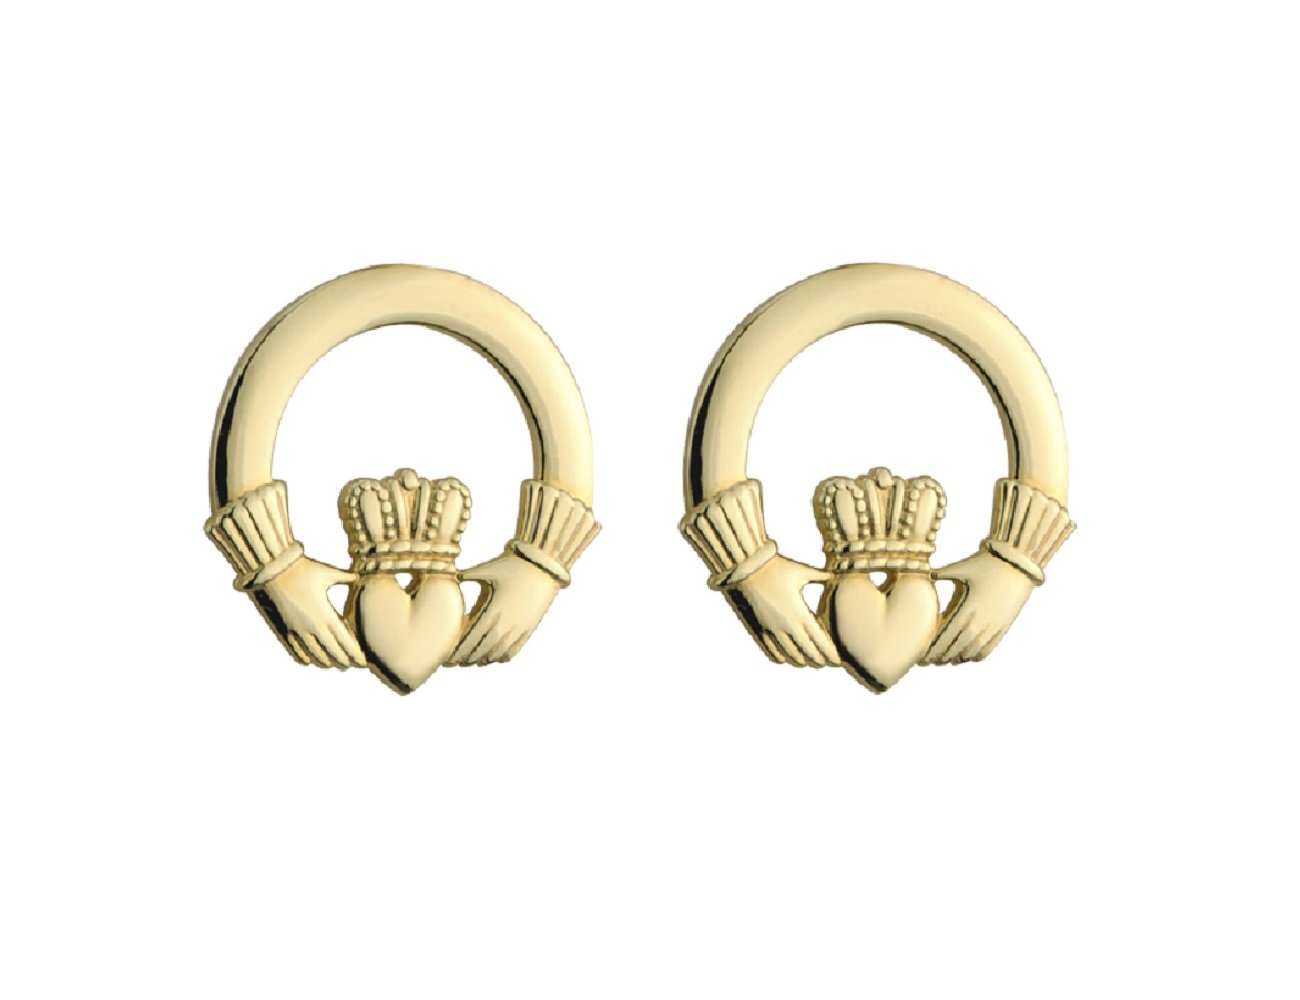 14K Gold Claddagh Stud Earrings: Irish Symbols of Love and Friendship